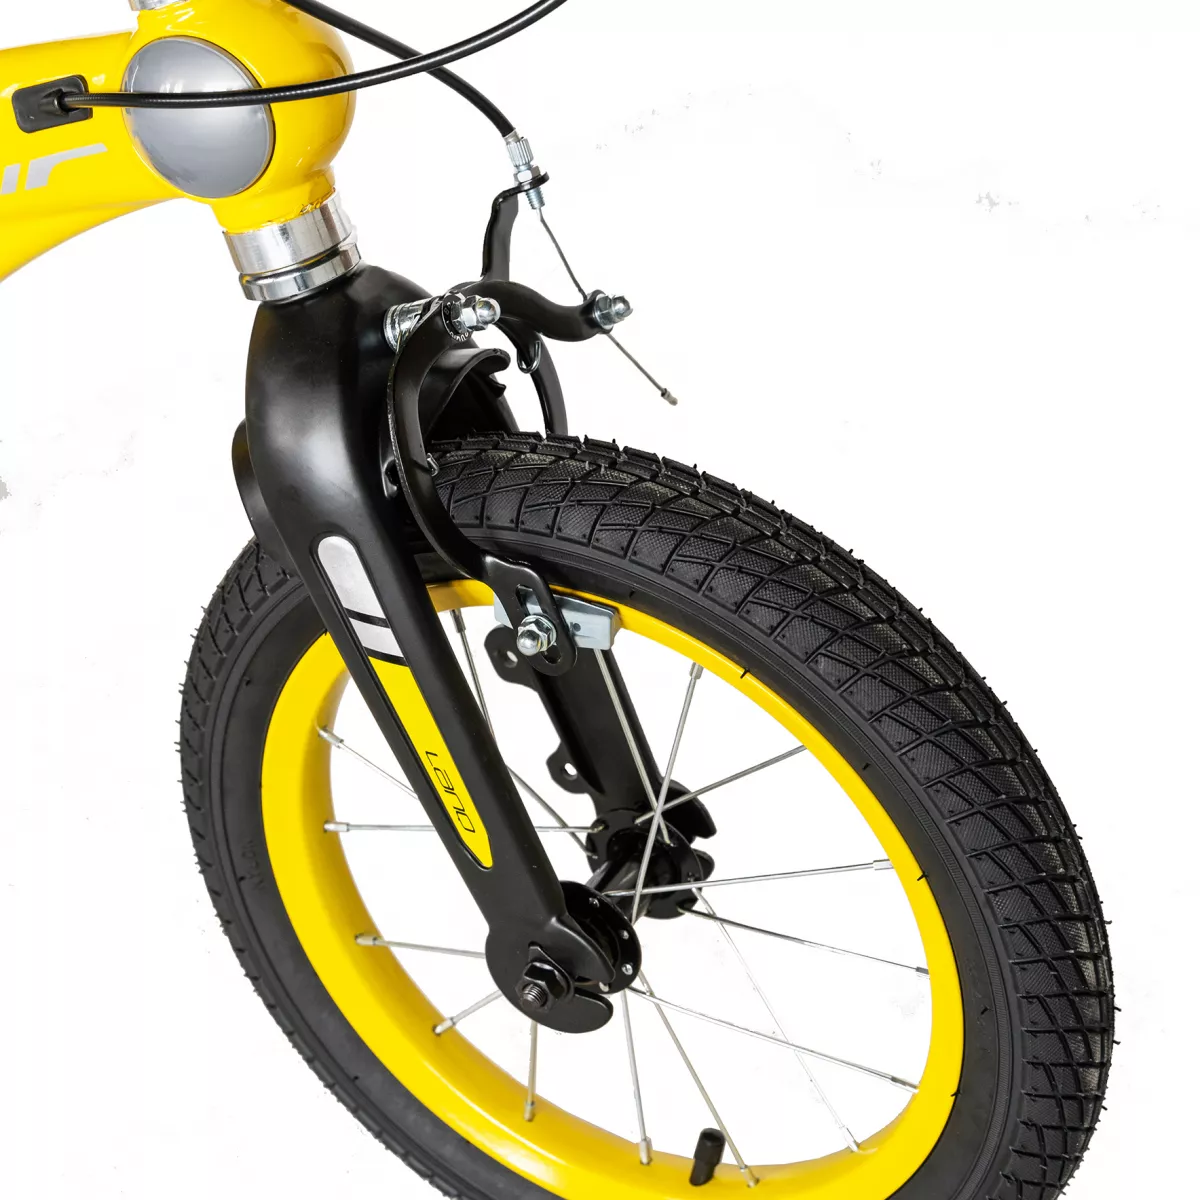 Bicicleta copii W1639D, roata 16", cadru aliaj magneziu, frana C-Brake, roti ajutatoare, 4-6 ani, galben/negru